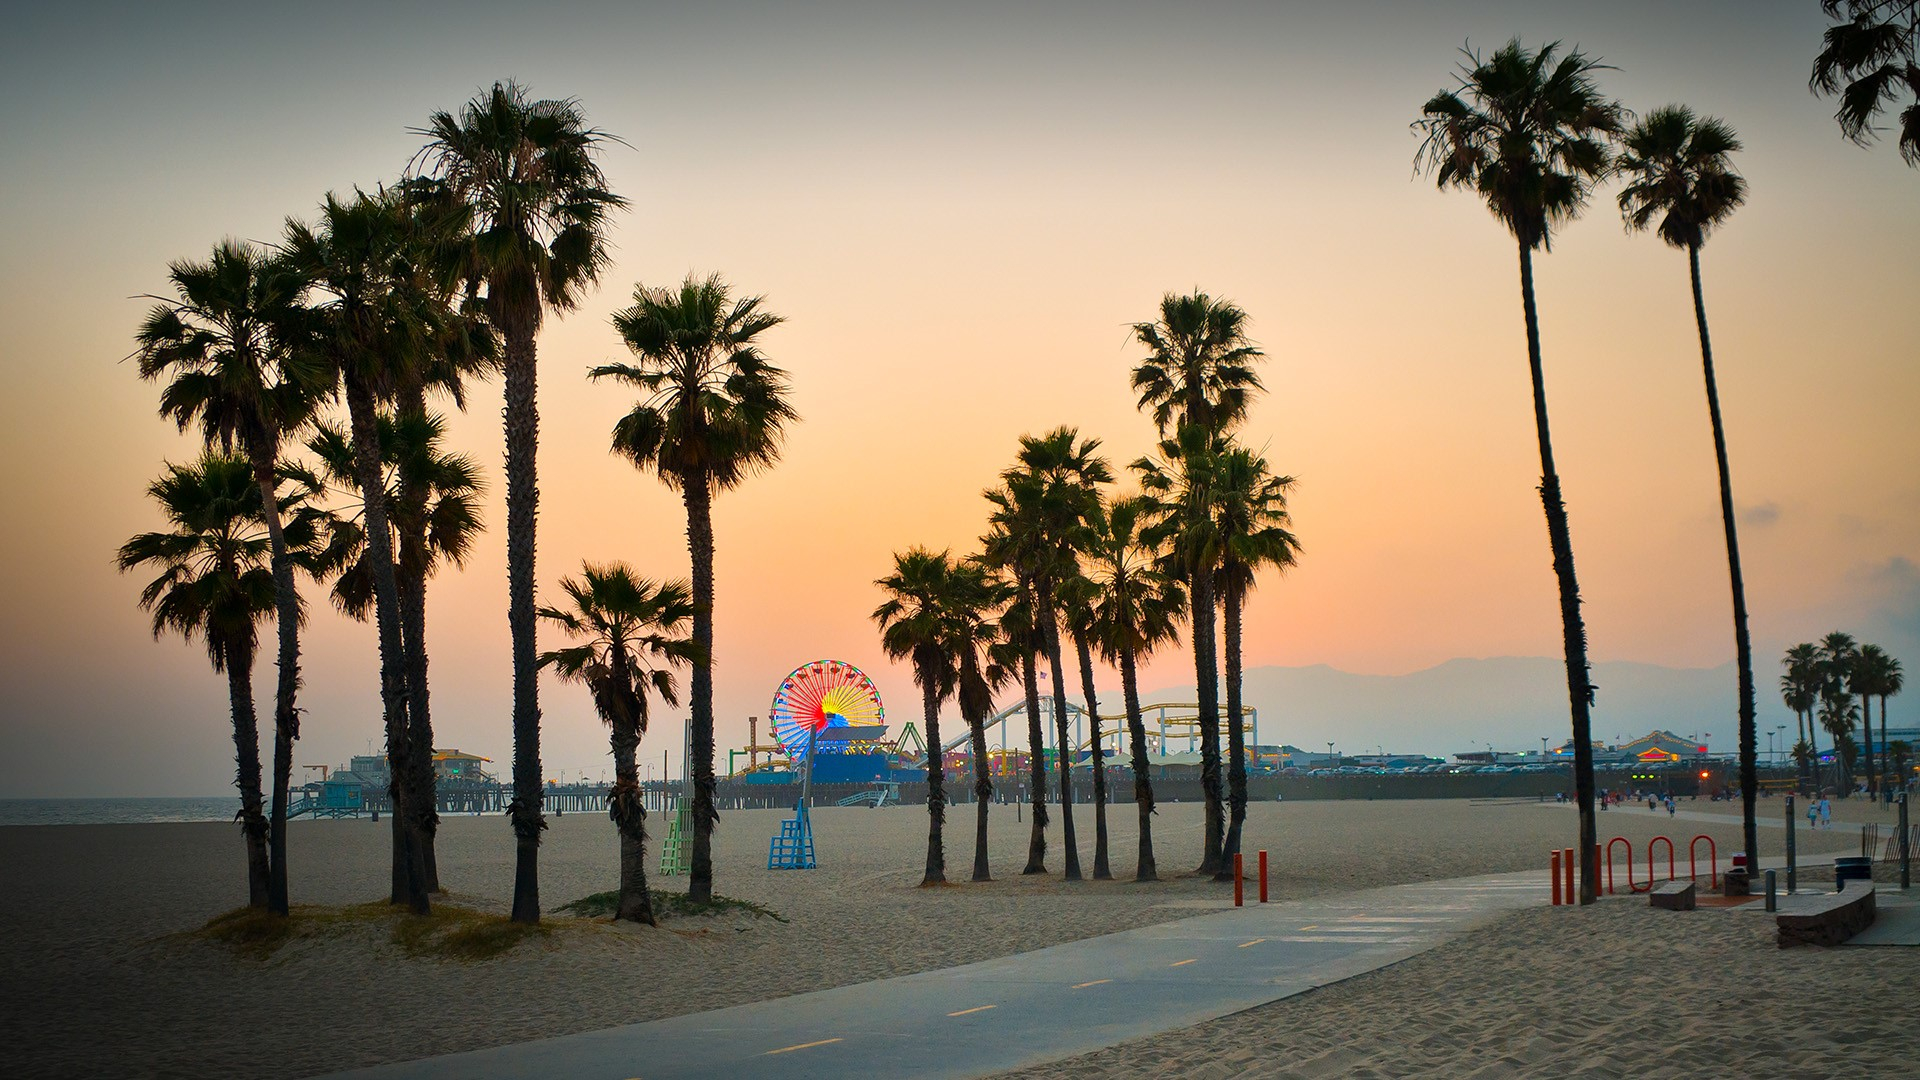 1920x1080 Santa Monica Pier at sunset, California, USA | Windows 10 Spotlight Images